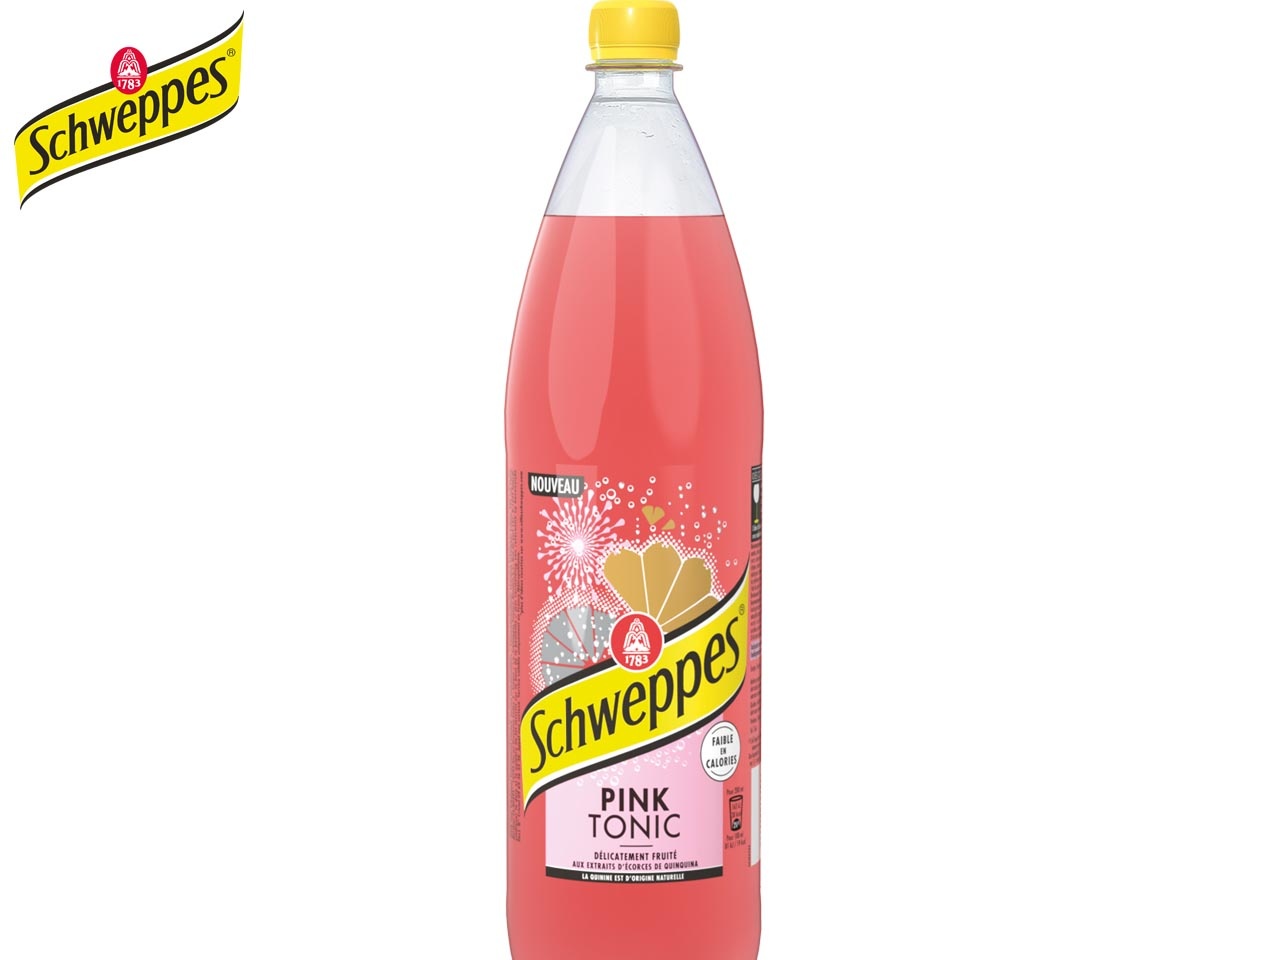 Schweppes lance sa nouvelle boisson, le Pink Tonic !